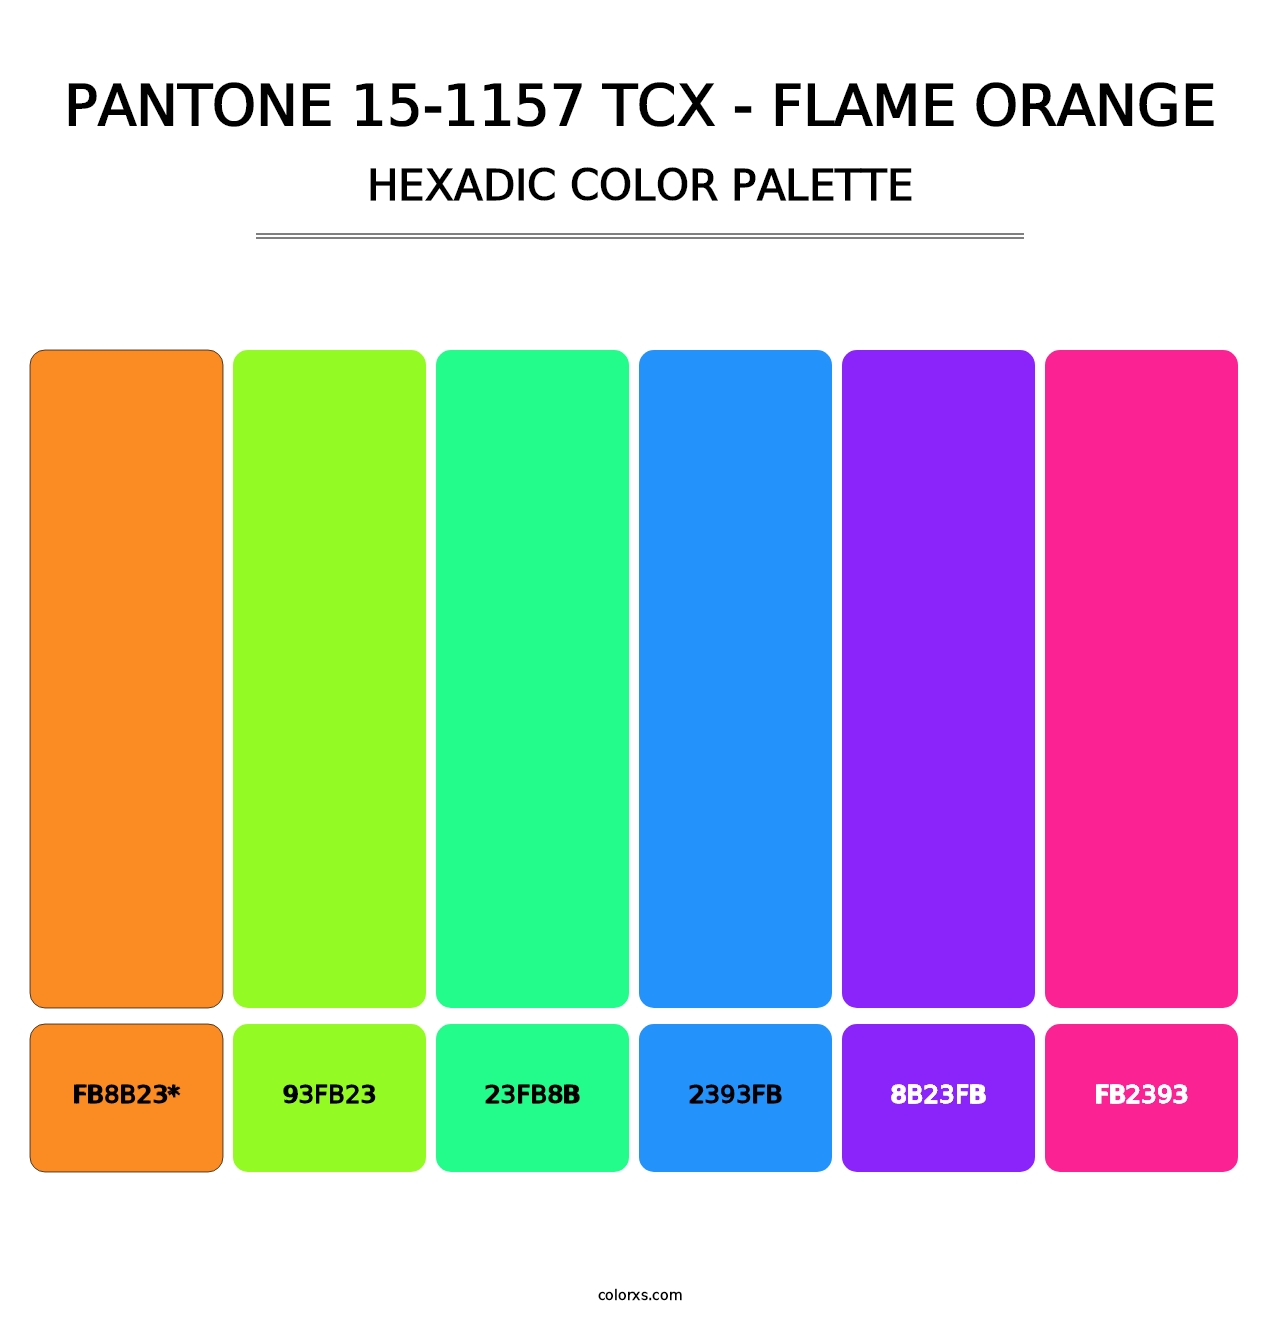 PANTONE 15-1157 TCX - Flame Orange - Hexadic Color Palette